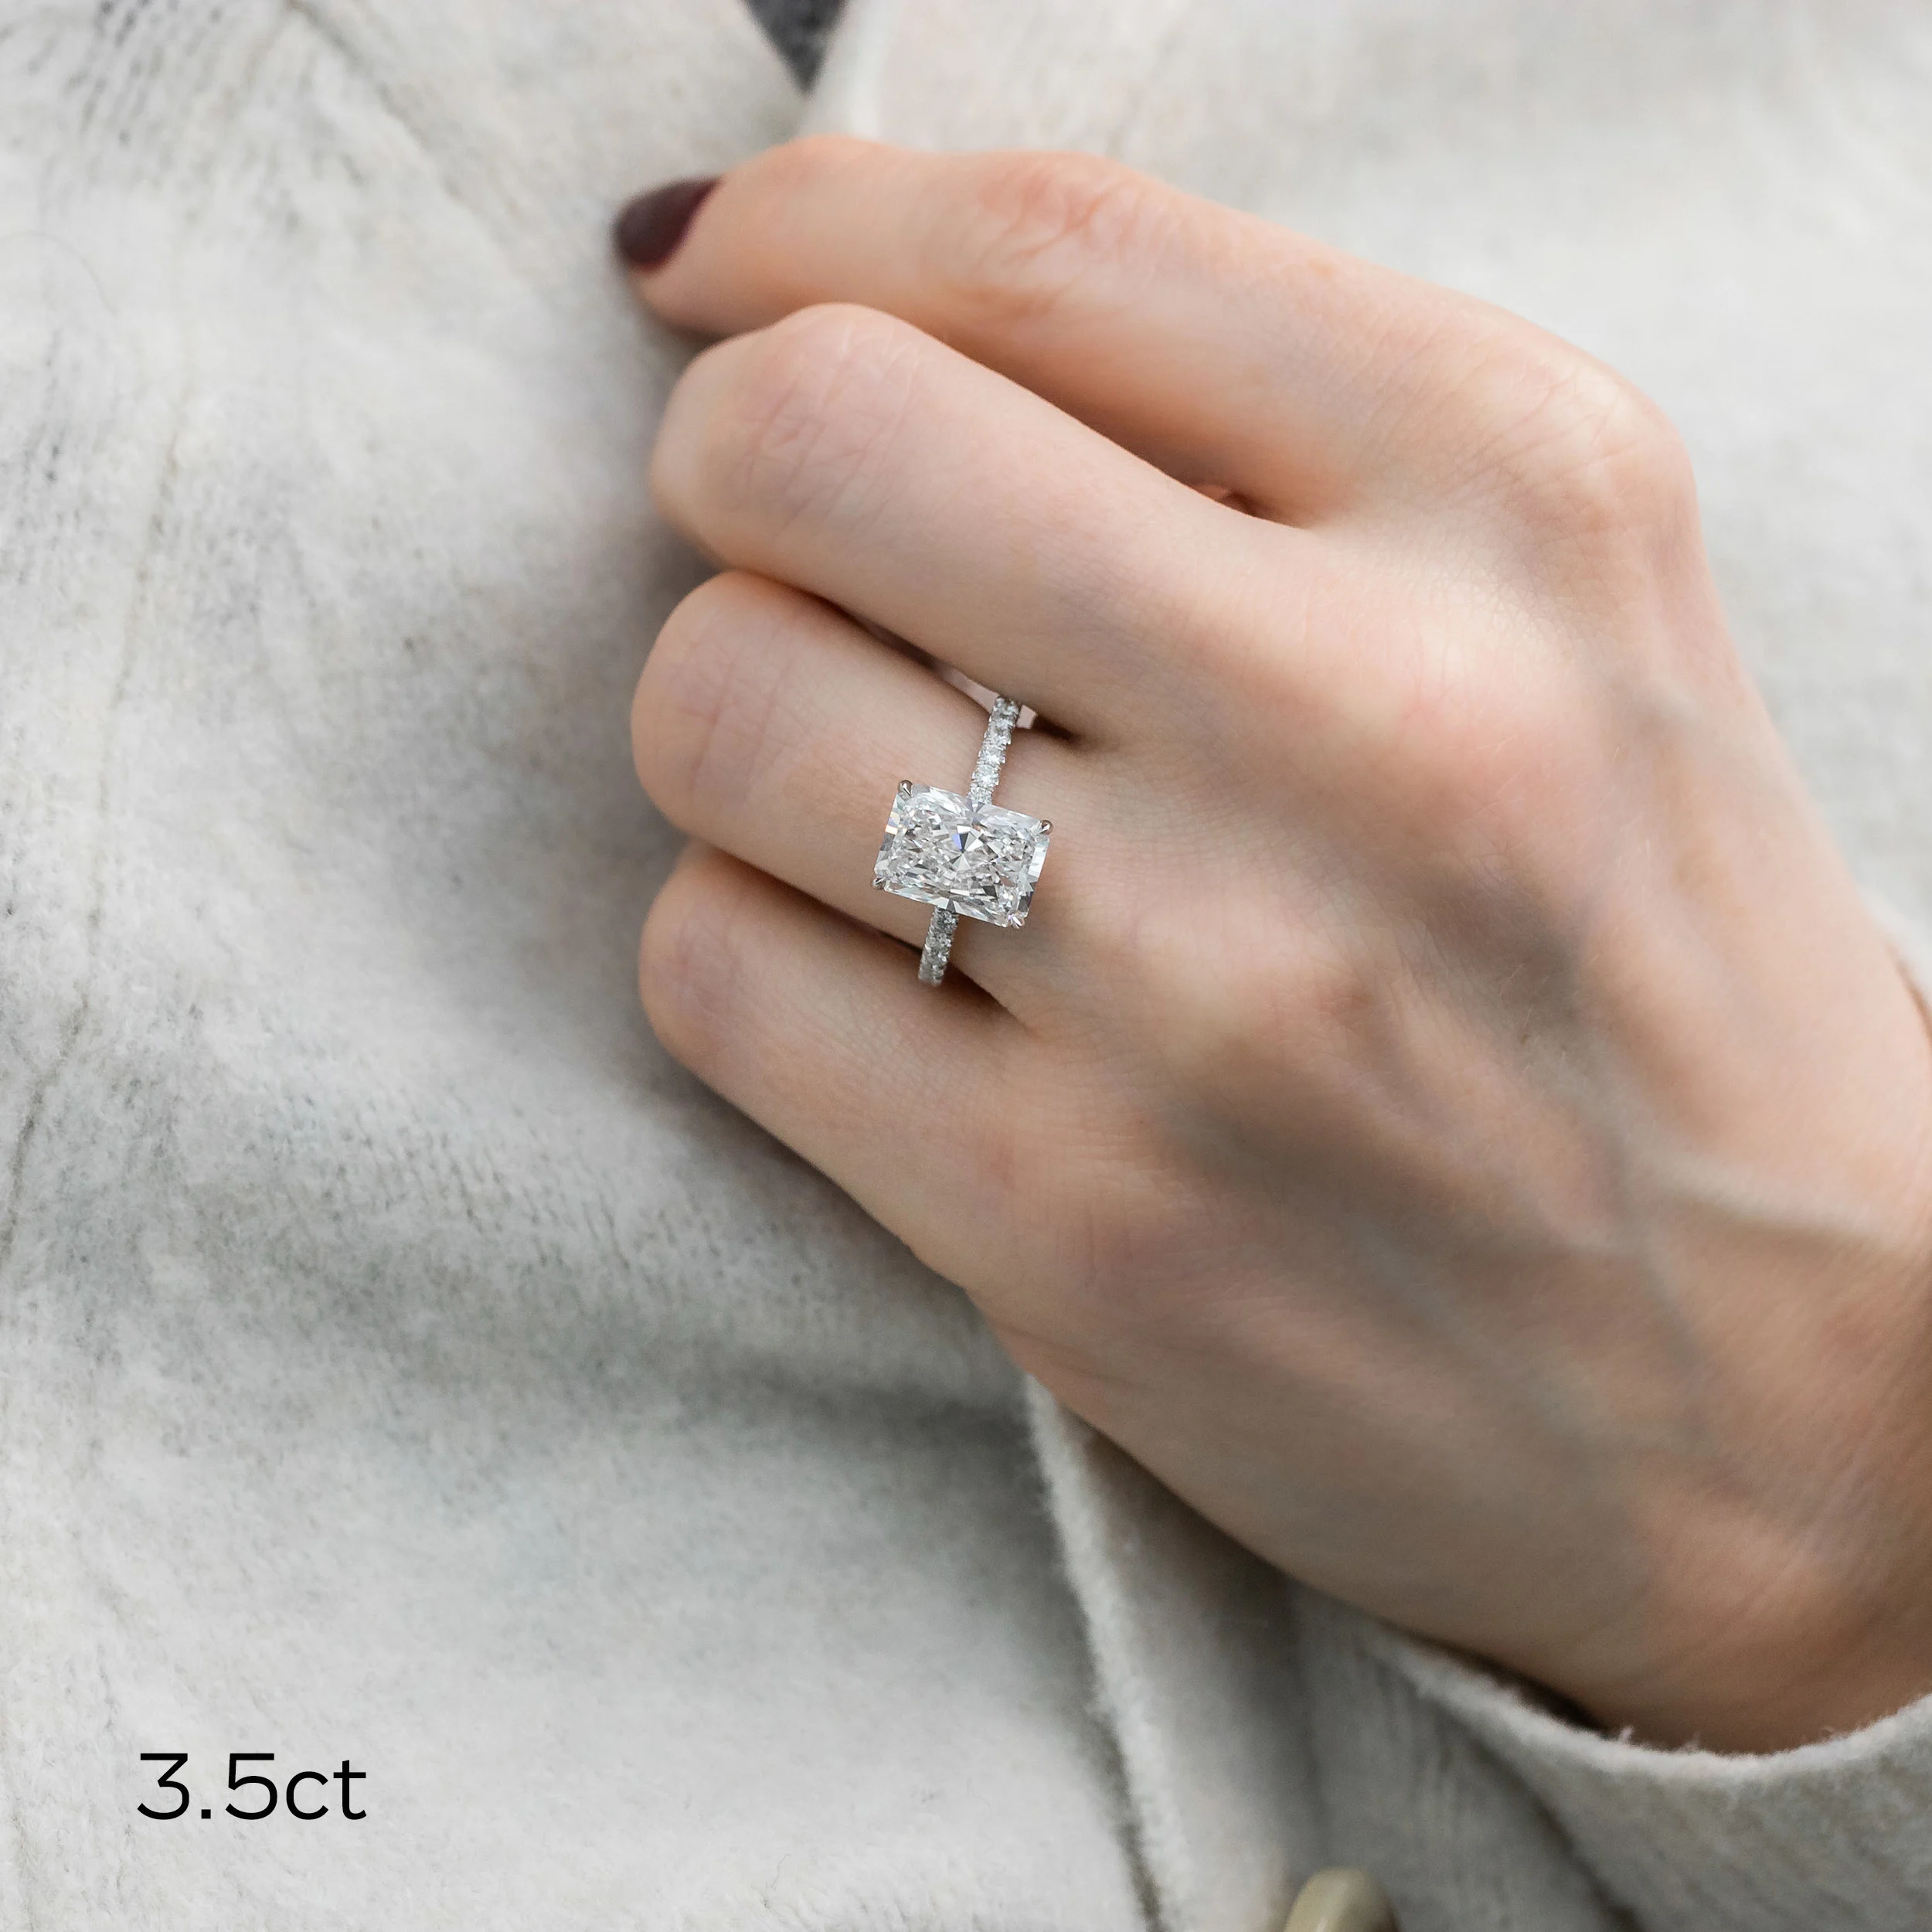 Exceptional Quality 3.5 Carat Lab Diamonds set in Platinum Radiant Petite Four Prong Pavé Setting (Main View)